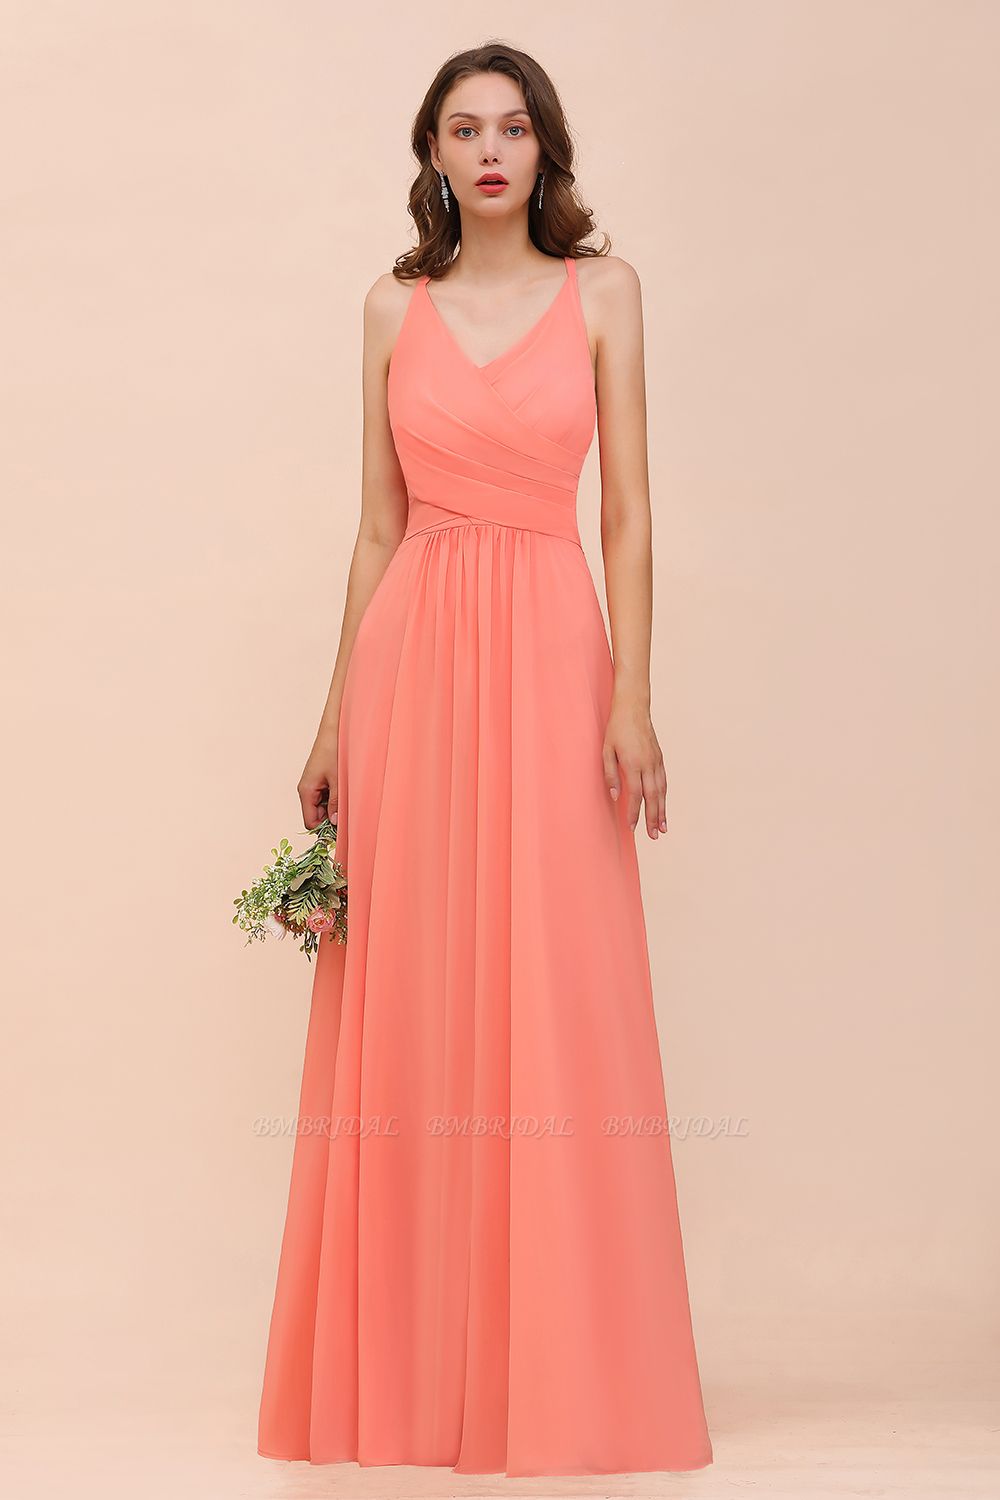 BMbridal Glamorous V-Neck Coral Chiffon Bridesmaid Dress Affordable with Ruffle